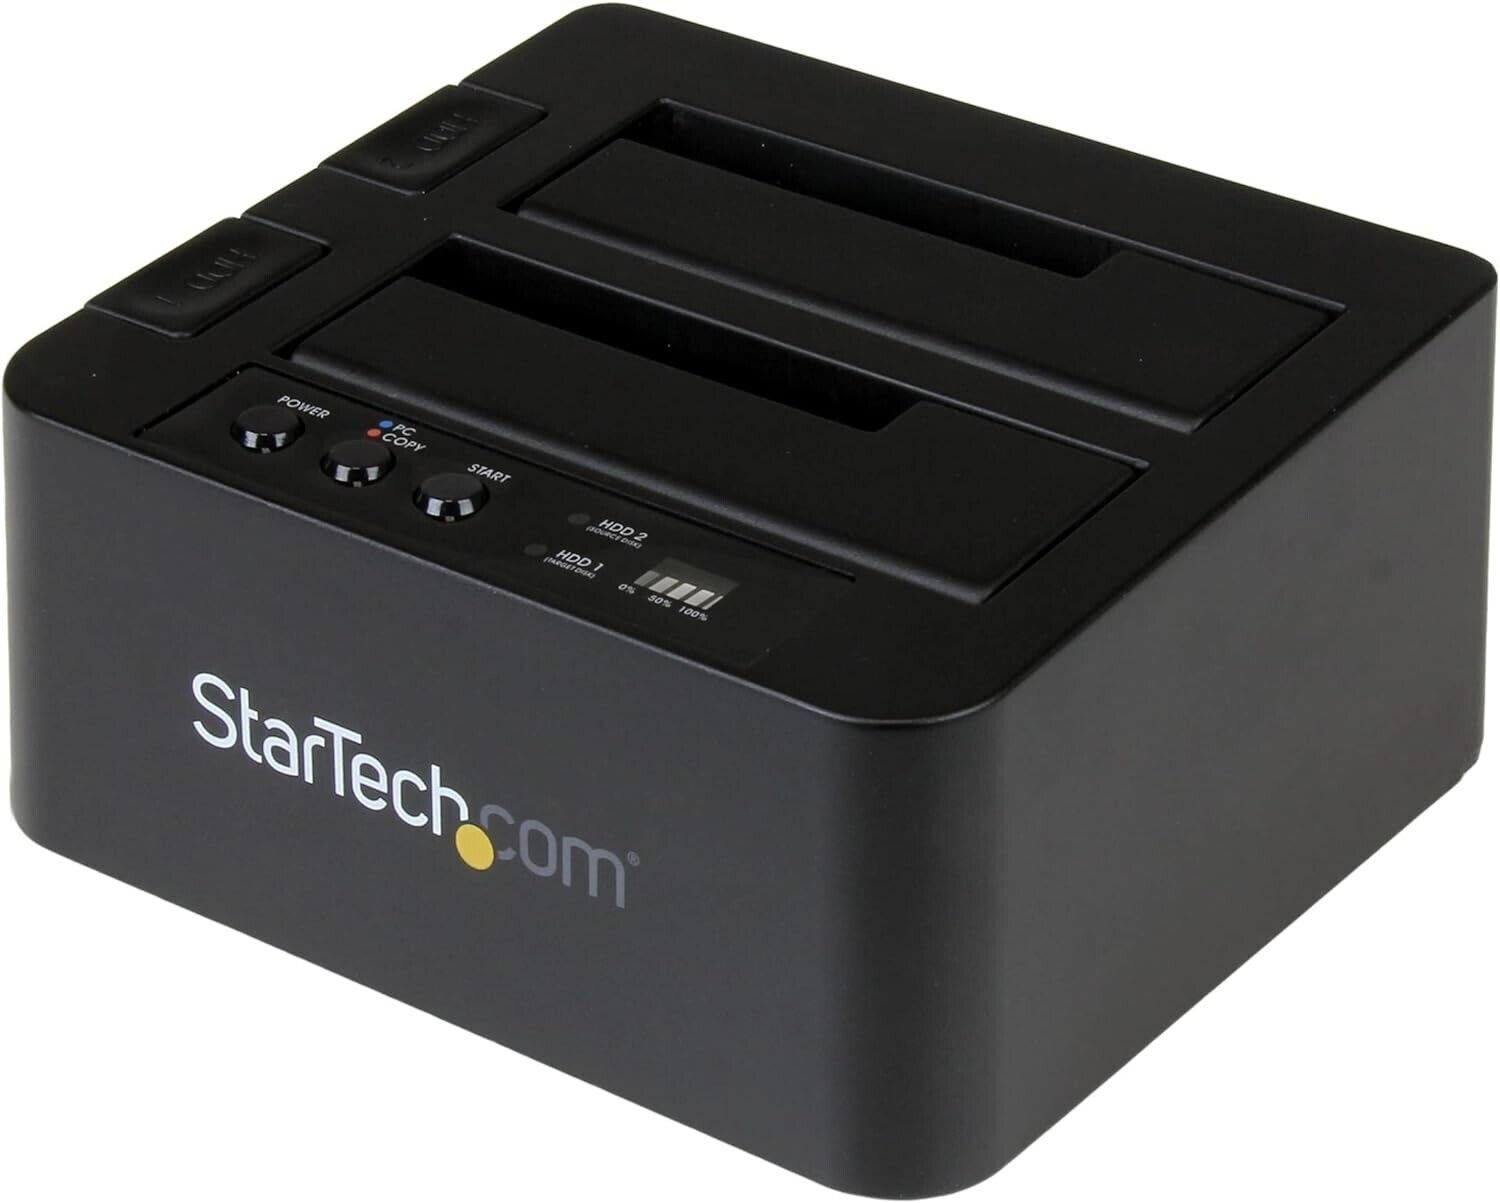 StarTech.com Dual Bay Hard Drive Duplicator and Eraser, New Open Box